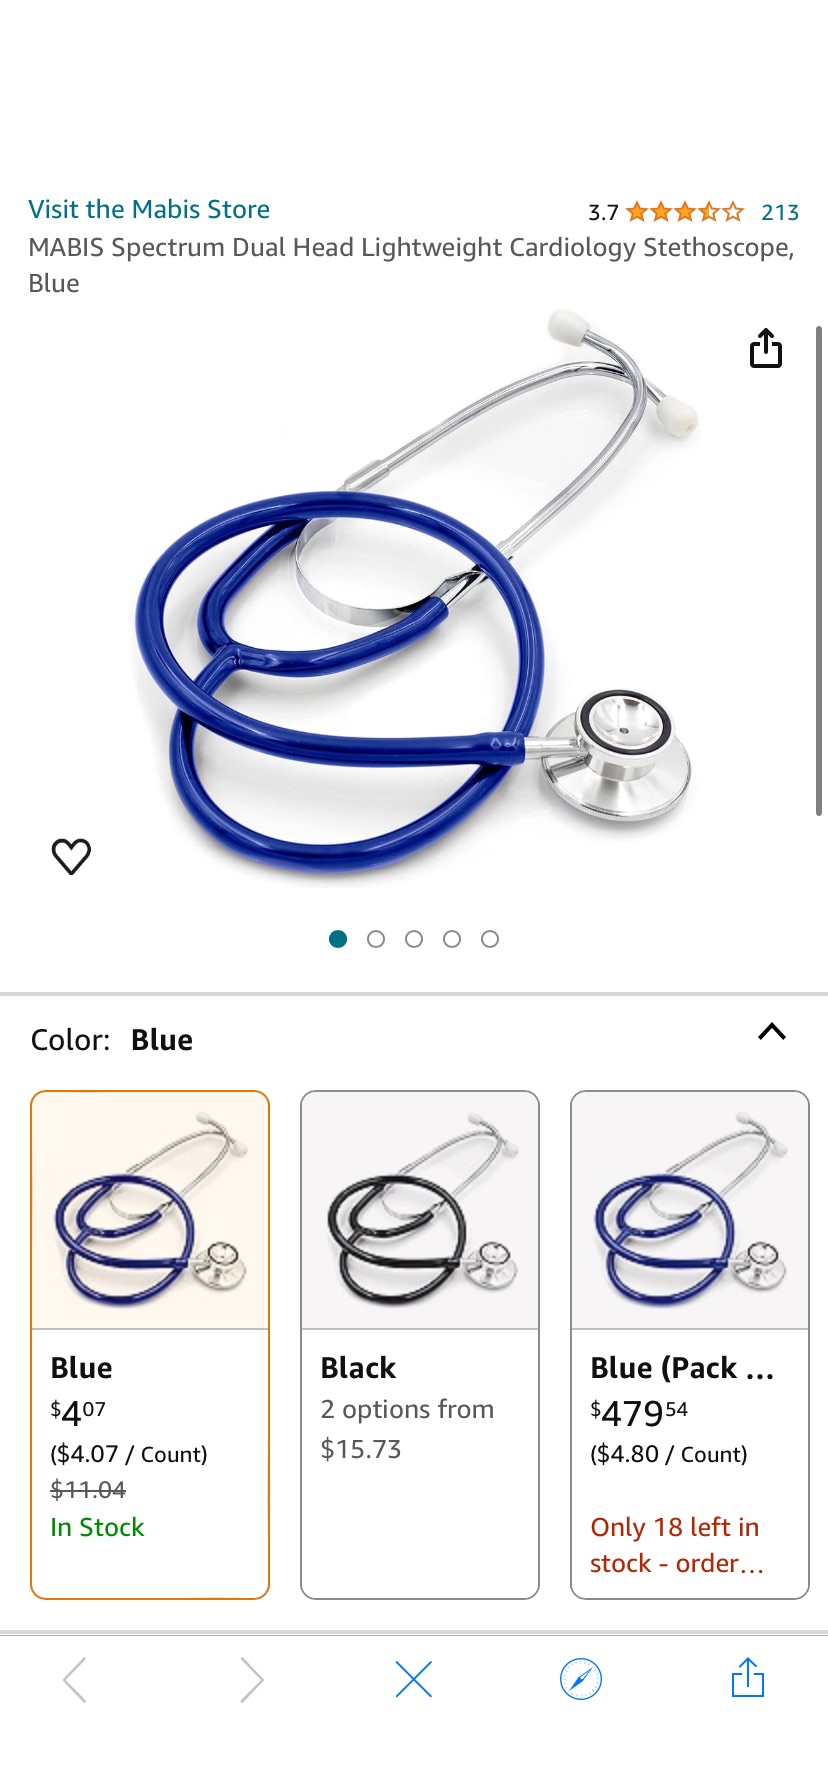 Amazon.com: MABIS Spectrum Dual Head Lightweight Cardiology Stethoscope, Blue : Industrial & Scientific